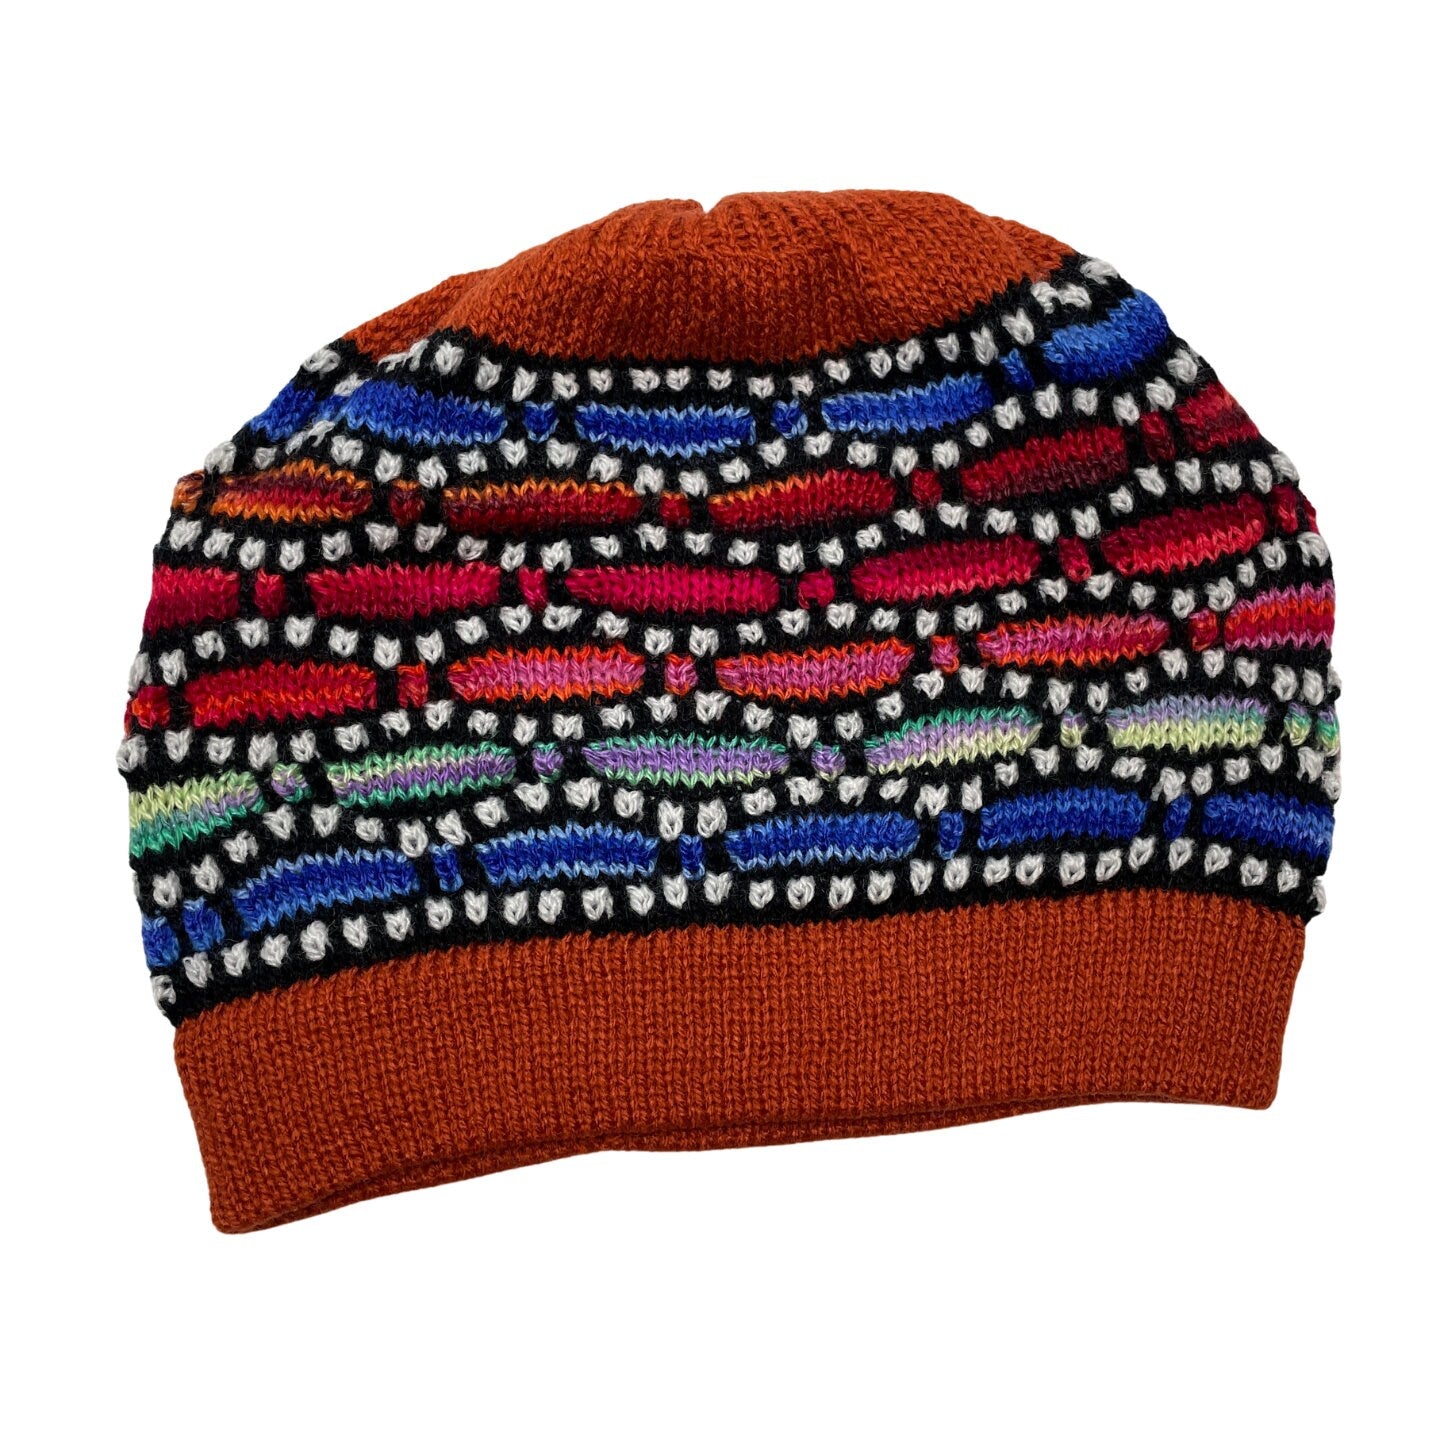 Multicolored Hand Knit Alpaca Beanie Hat